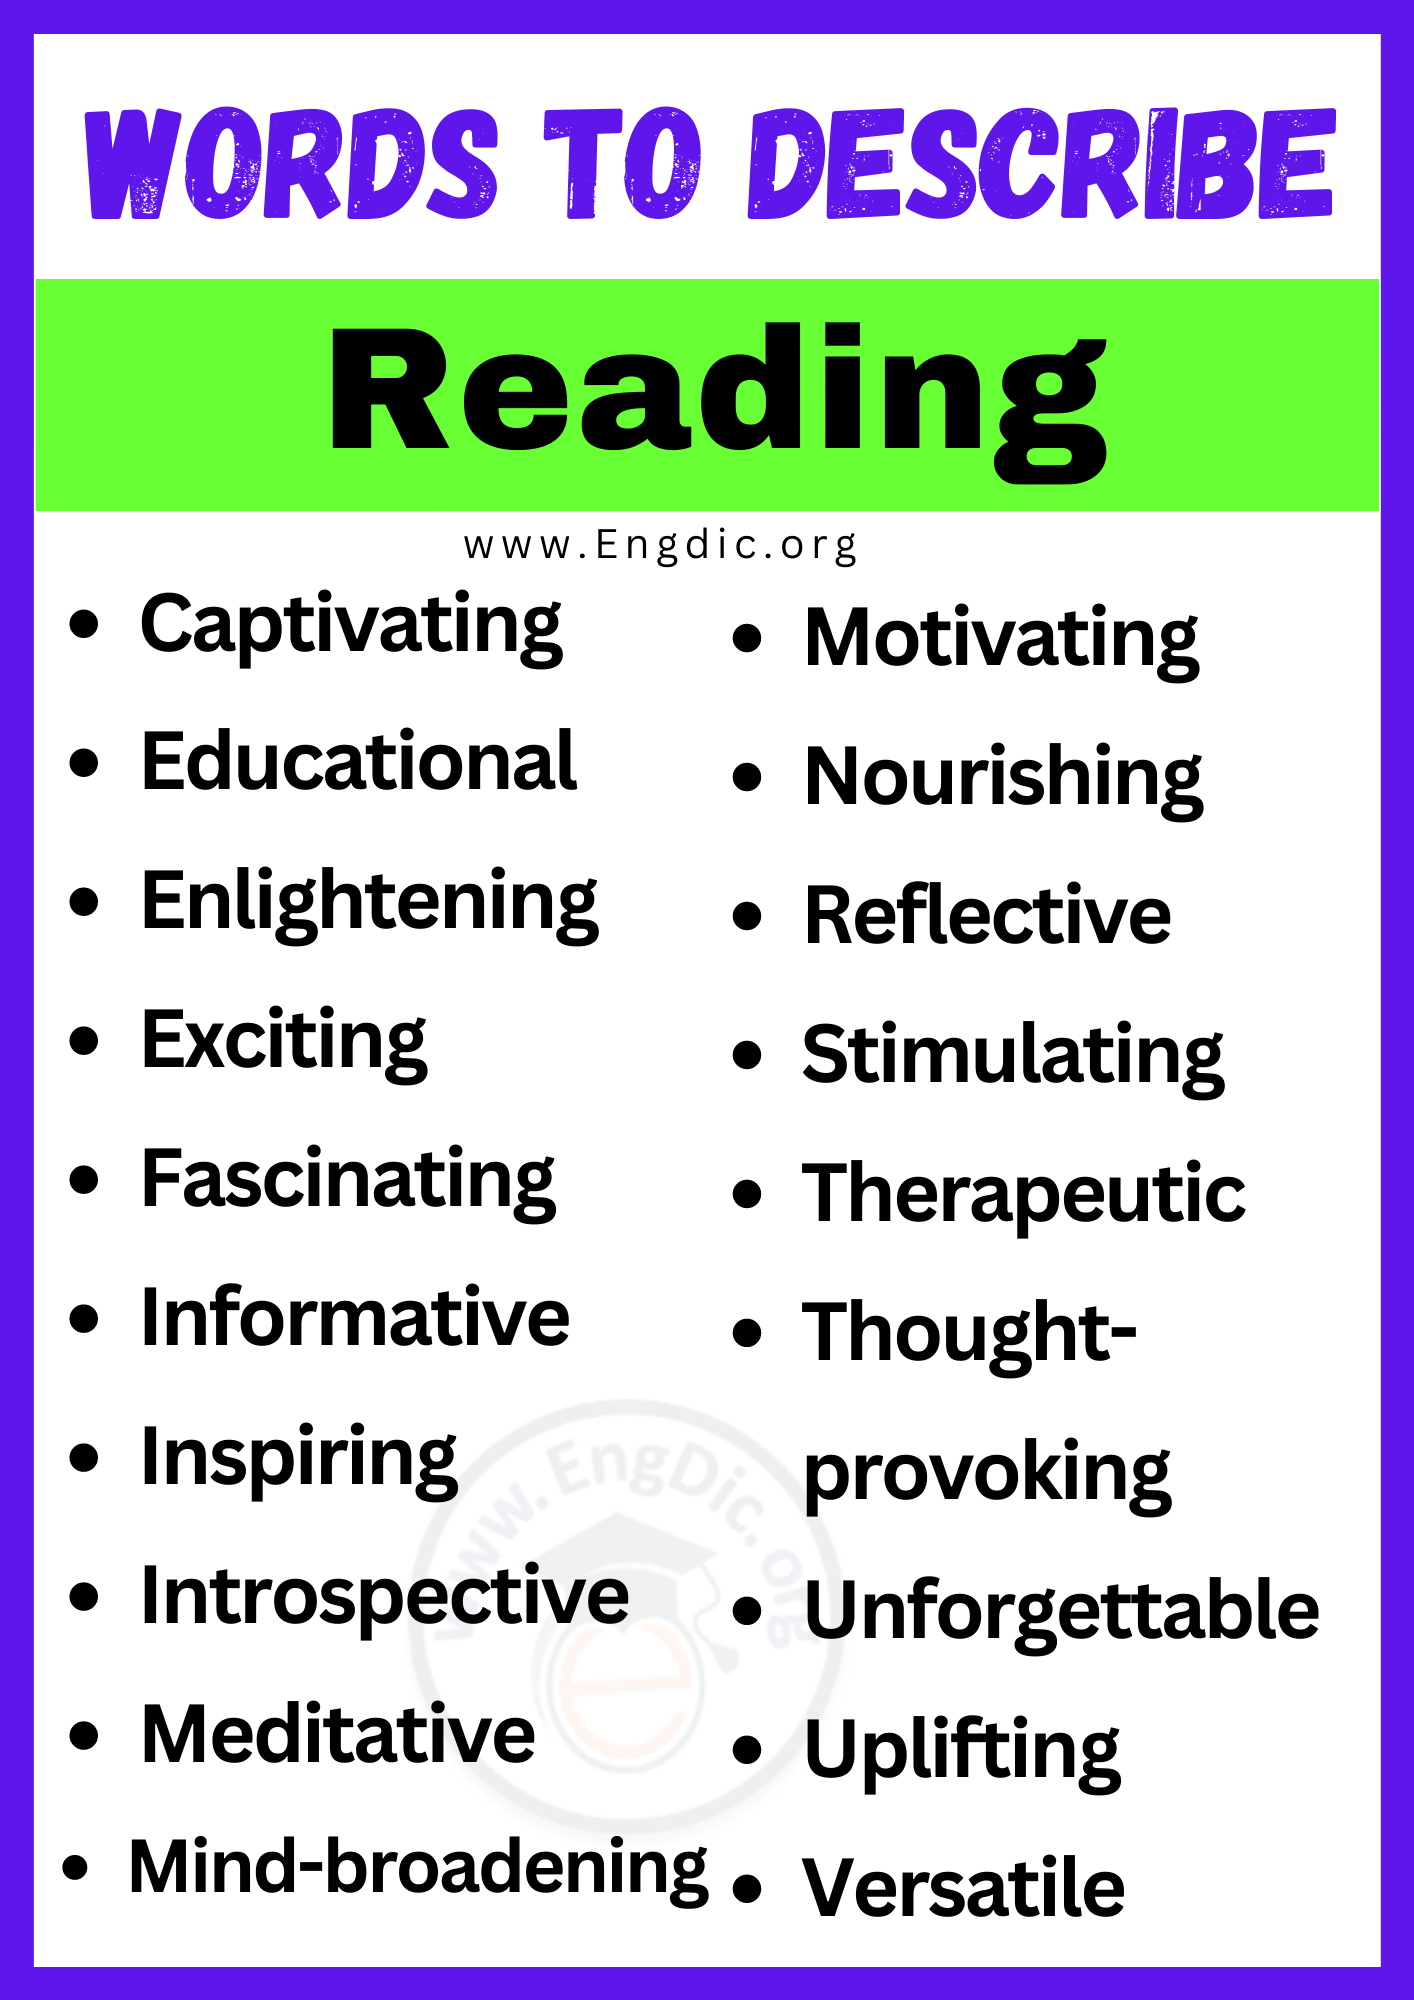 Words to Describe Reading